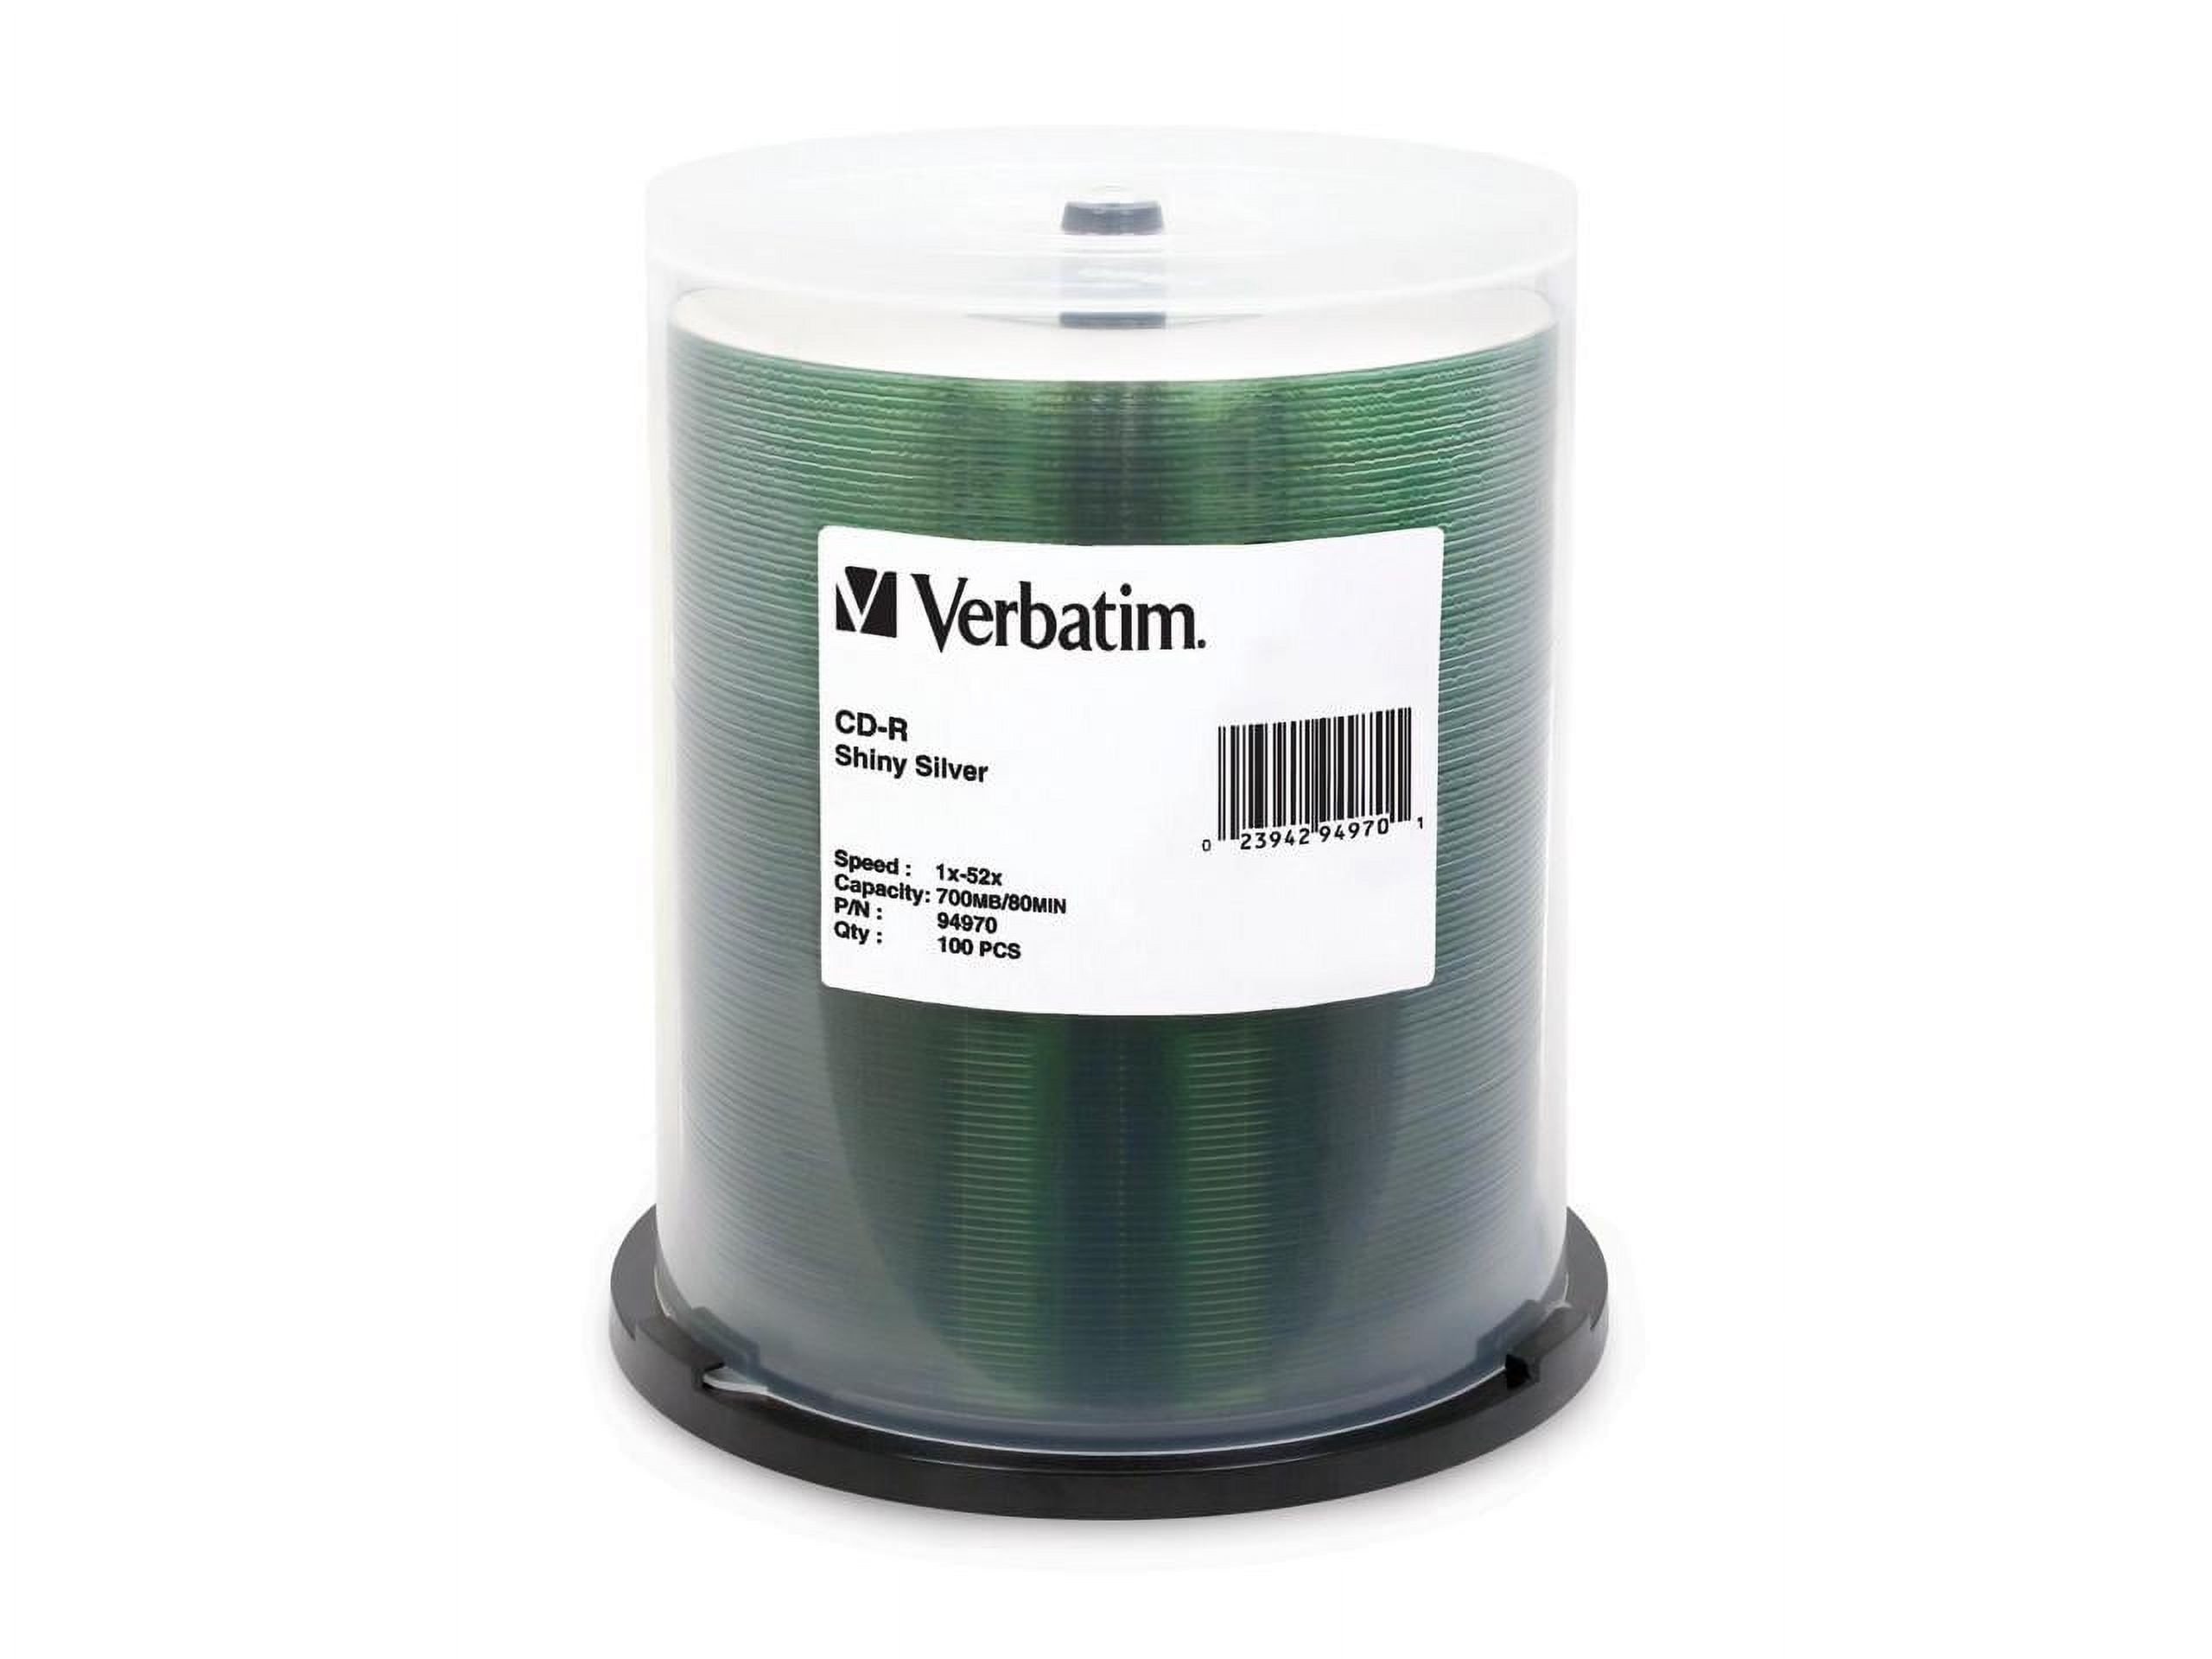 Verbatim CD-R 700MB 52X Shiny Silver Silk Screen Printable - 100pk Spindle - image 1 of 2